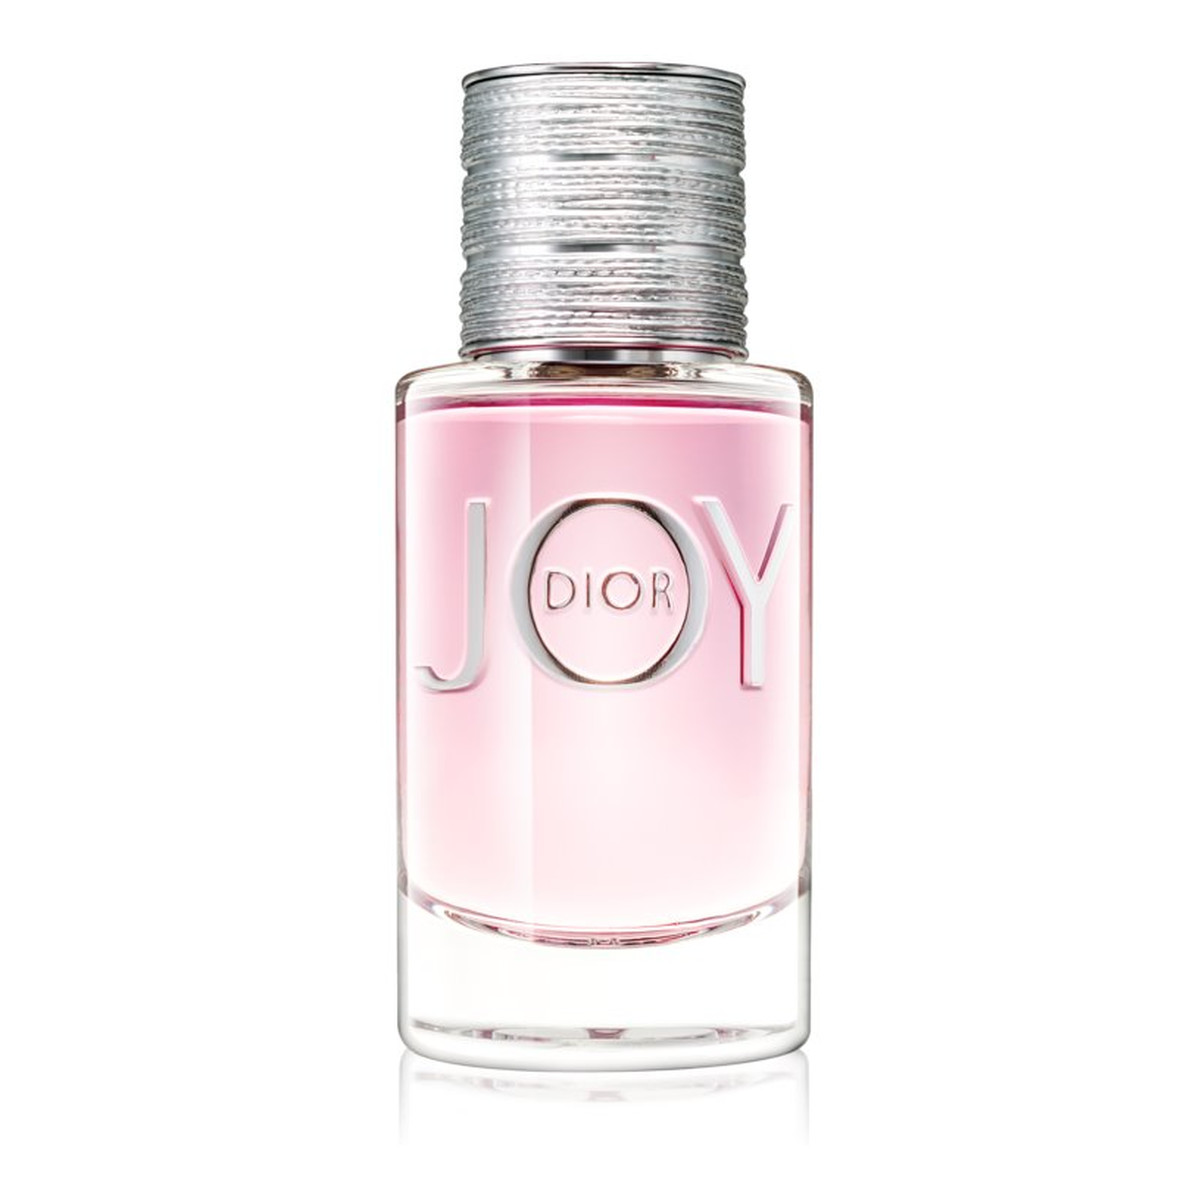 Dior Joy woda perfumowana 30ml